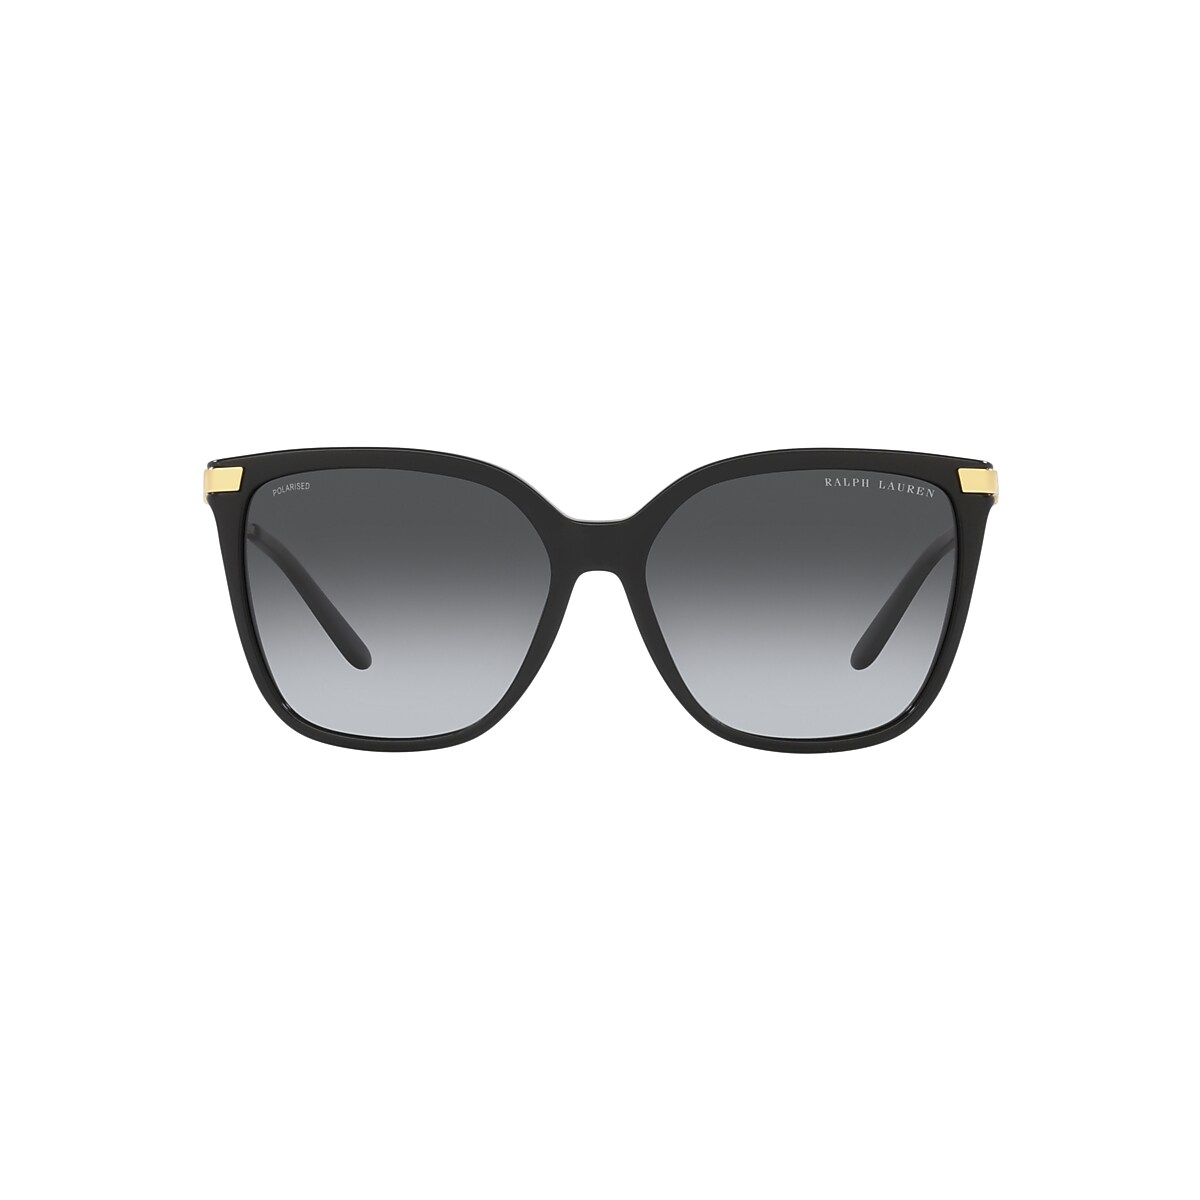 RALPH LAUREN RL8209 The Jacquie Shiny Black - Women Sunglasses, Gradient  Grey Polar Lens